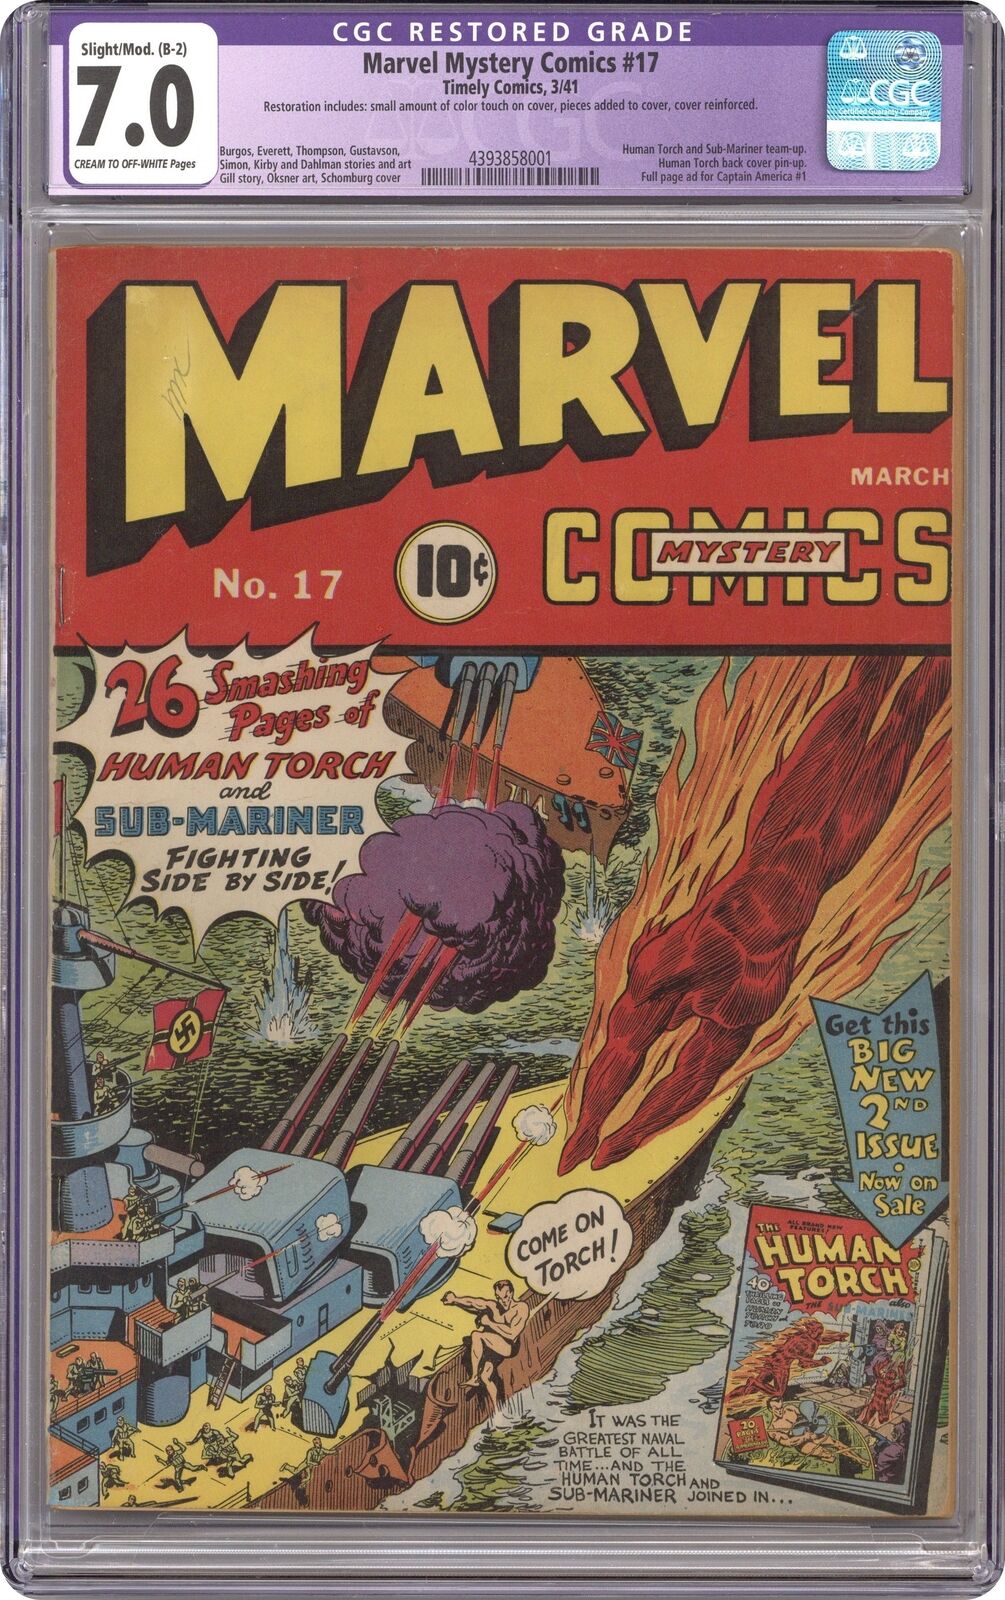 Marvel Mystery Comics #17 CGC 7.0 RESTORED 1941 4393858001